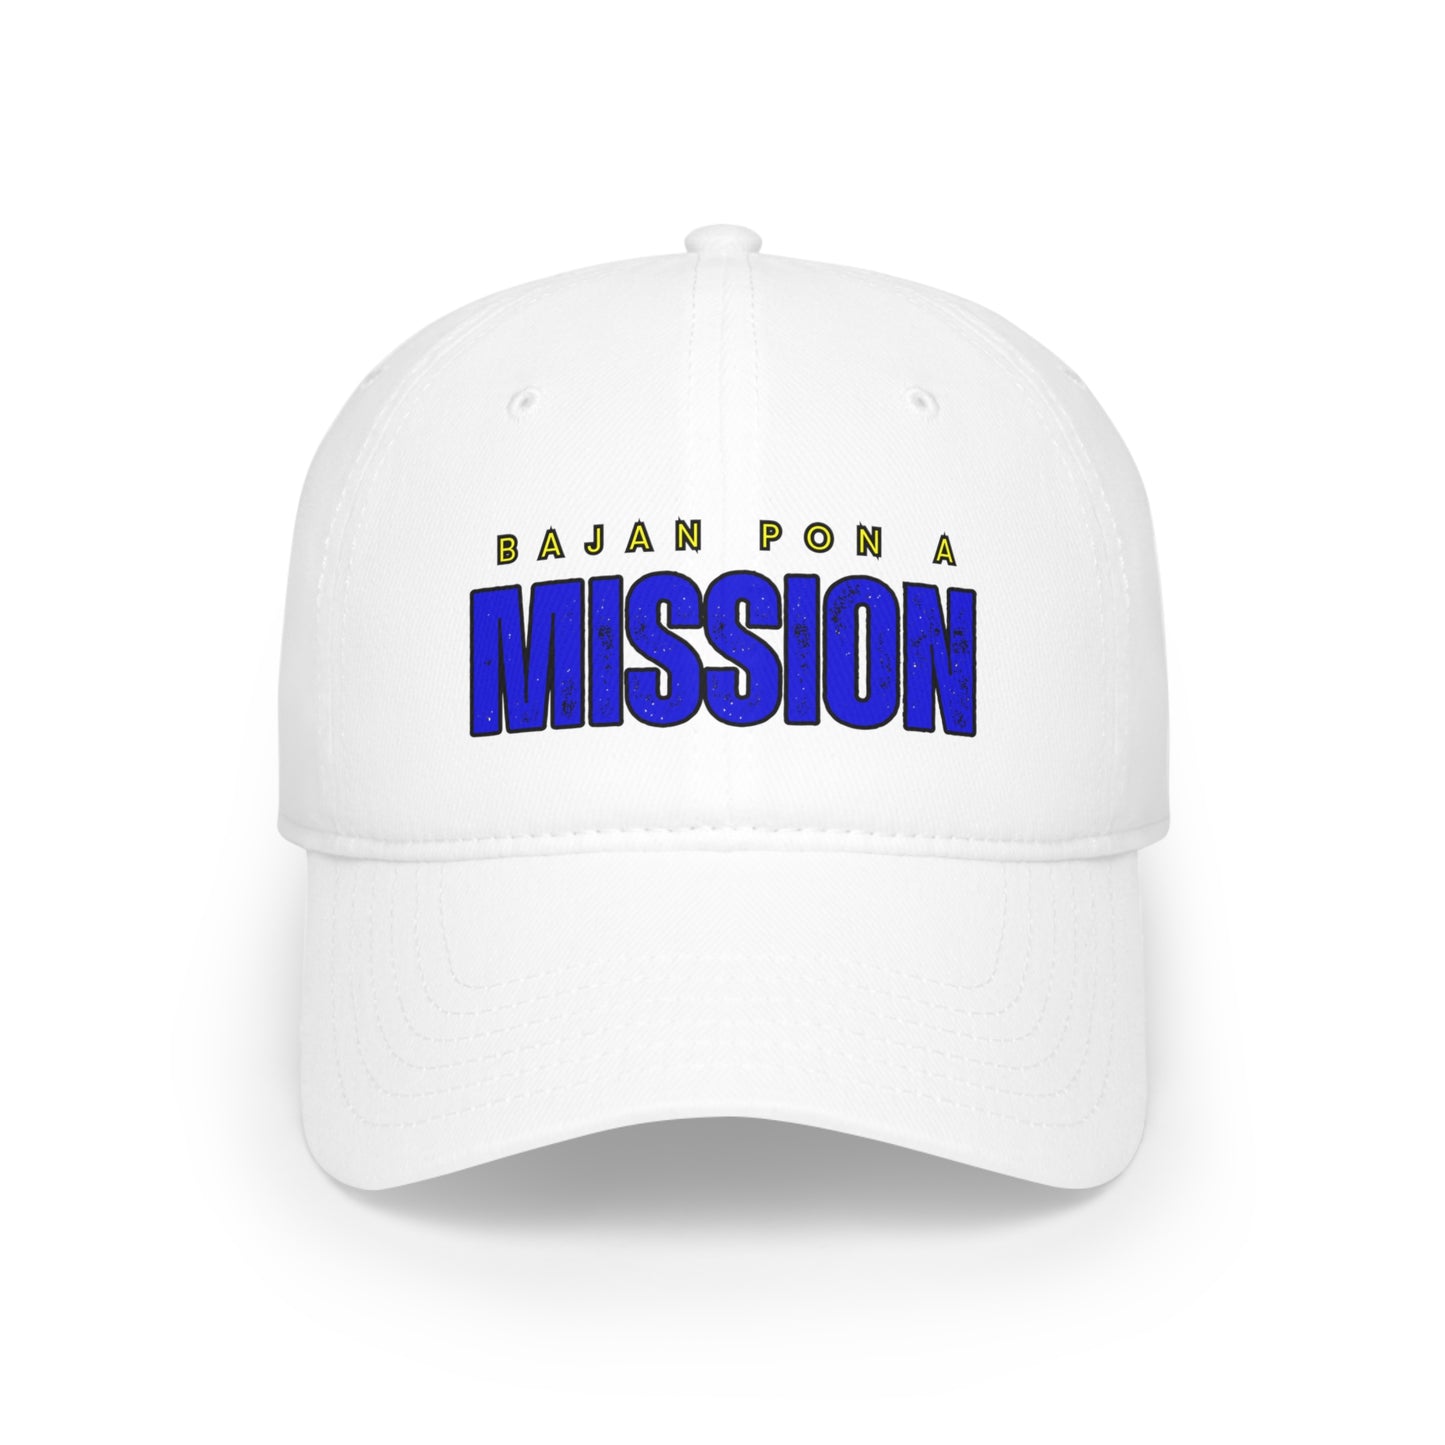 Bajan pon a Mission Profile Baseball Cap